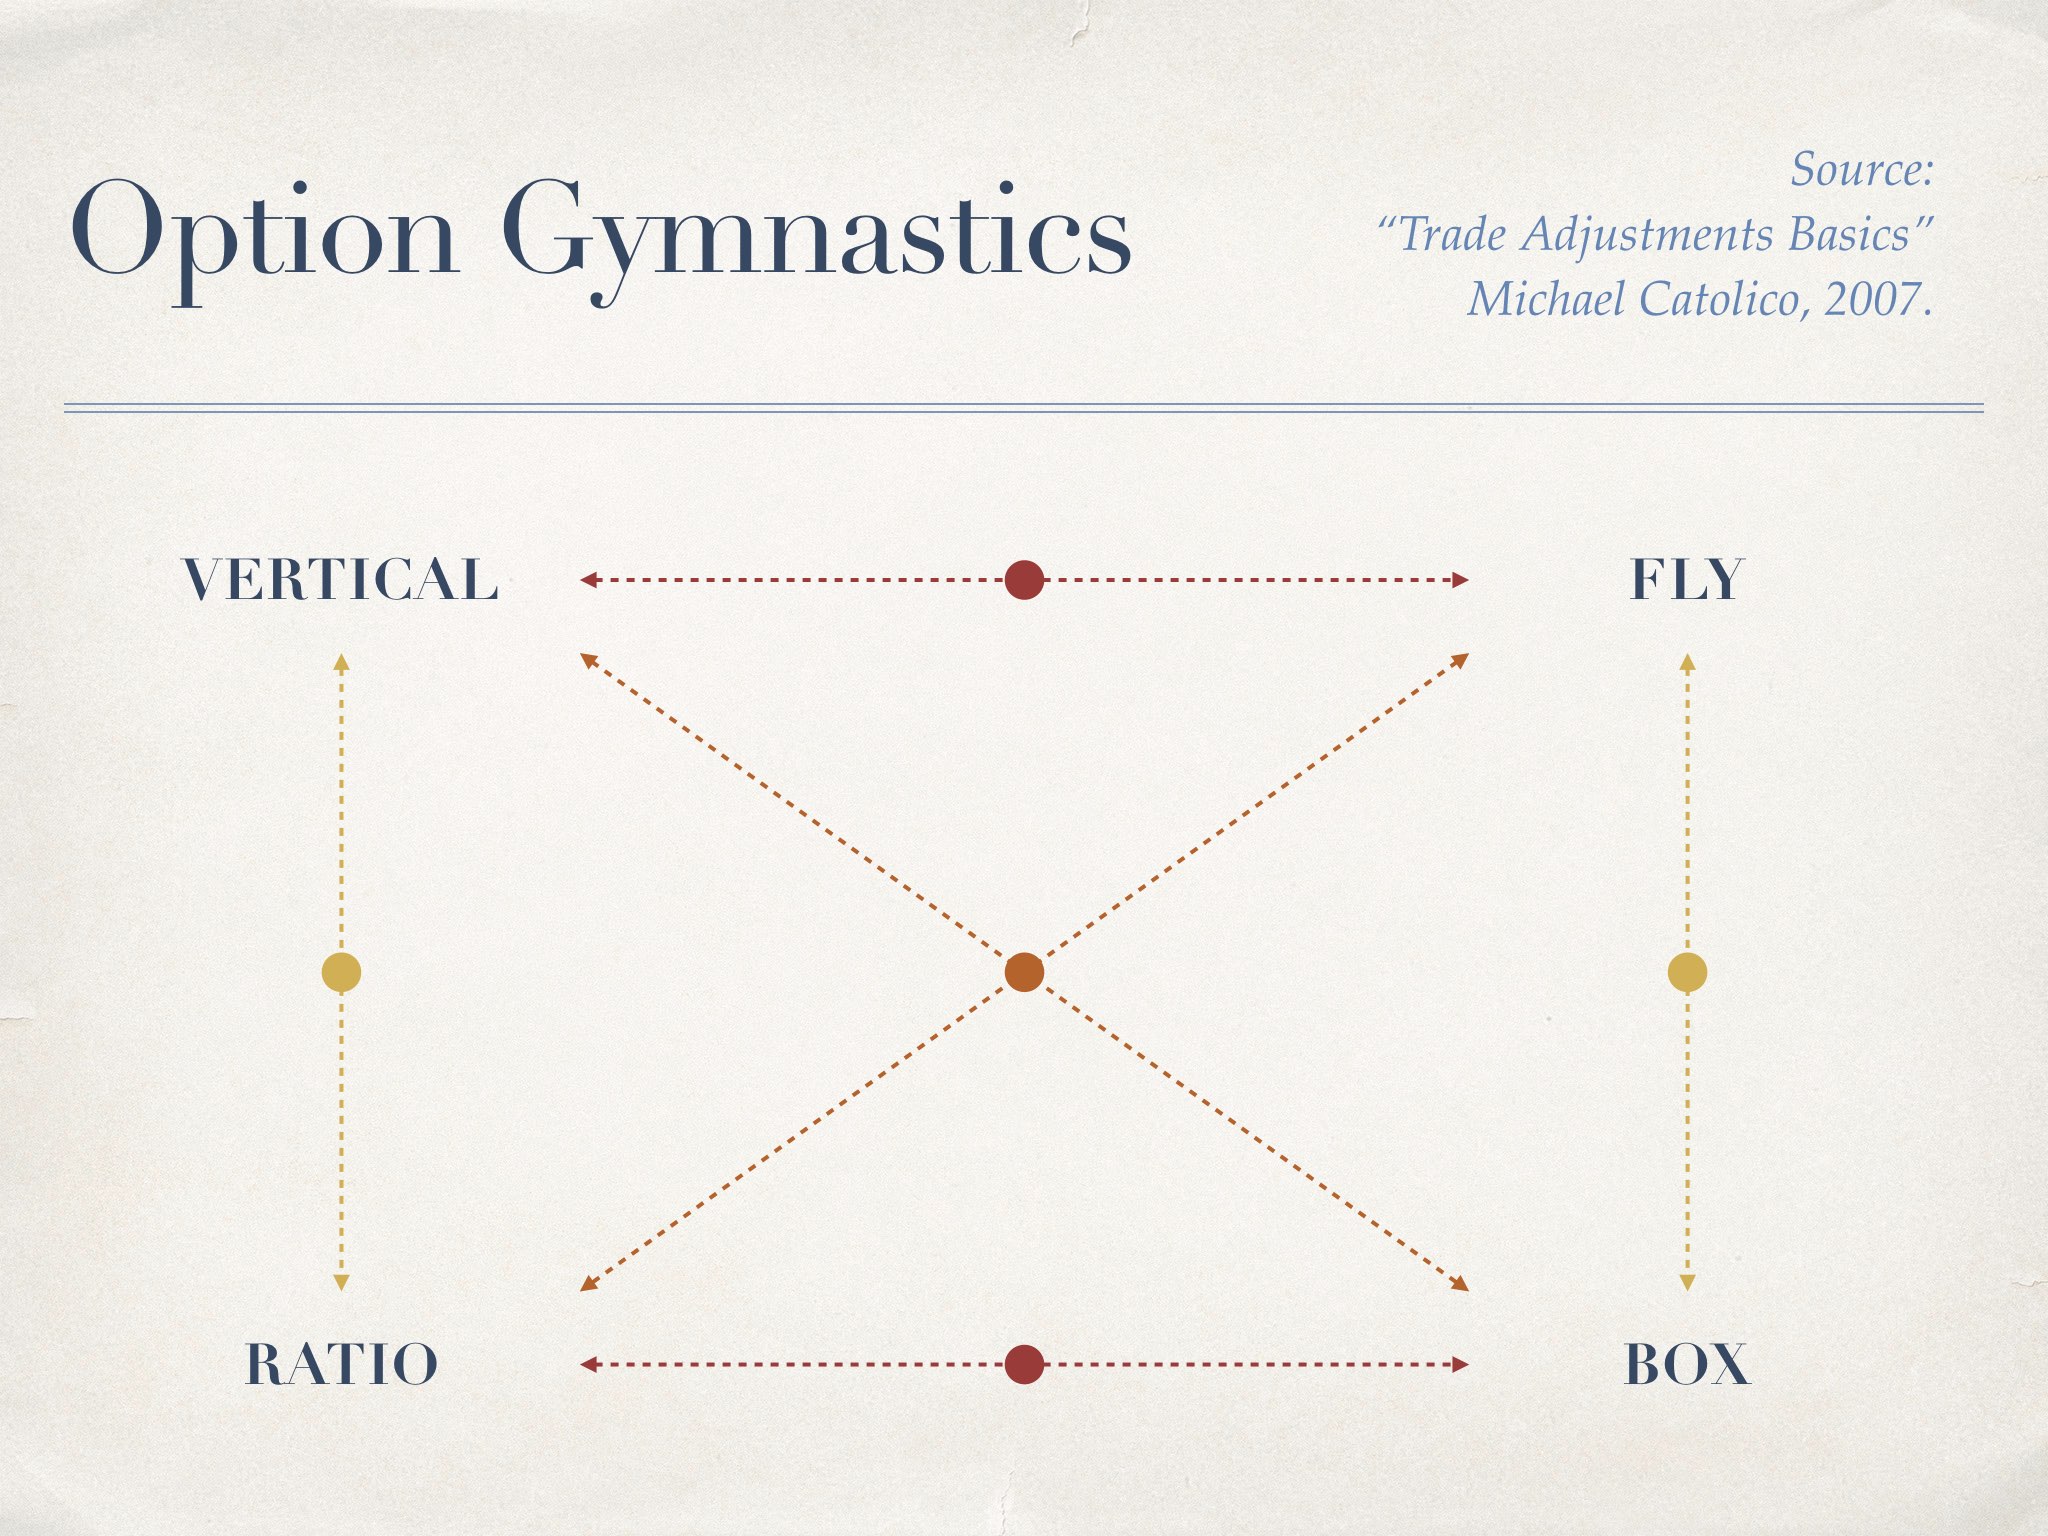 Chart of the Day: Option Gymnastics. Source: ‘Trade Adjustment Basics’ by Michael Catolico, 2007.